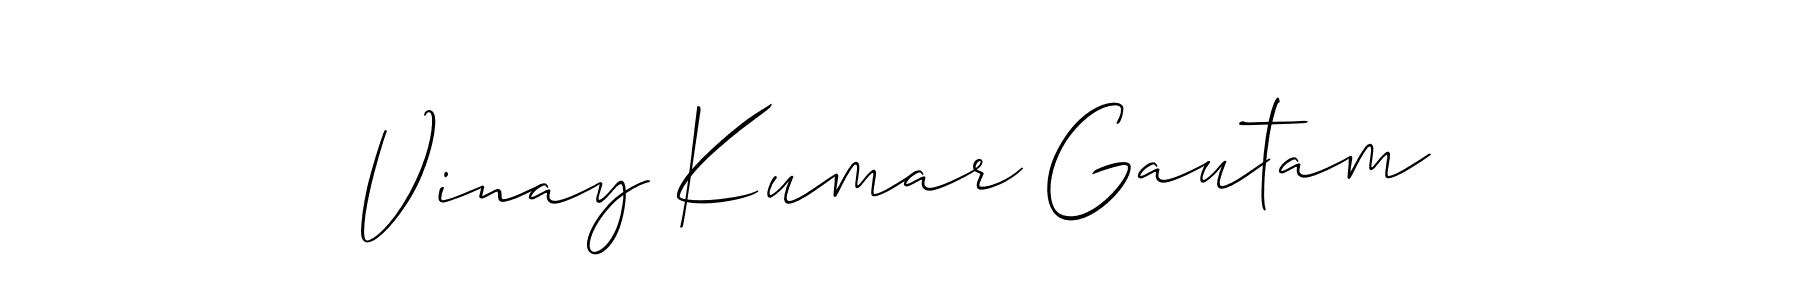 How to make Vinay Kumar Gautam signature? Allison_Script is a professional autograph style. Create handwritten signature for Vinay Kumar Gautam name. Vinay Kumar Gautam signature style 2 images and pictures png